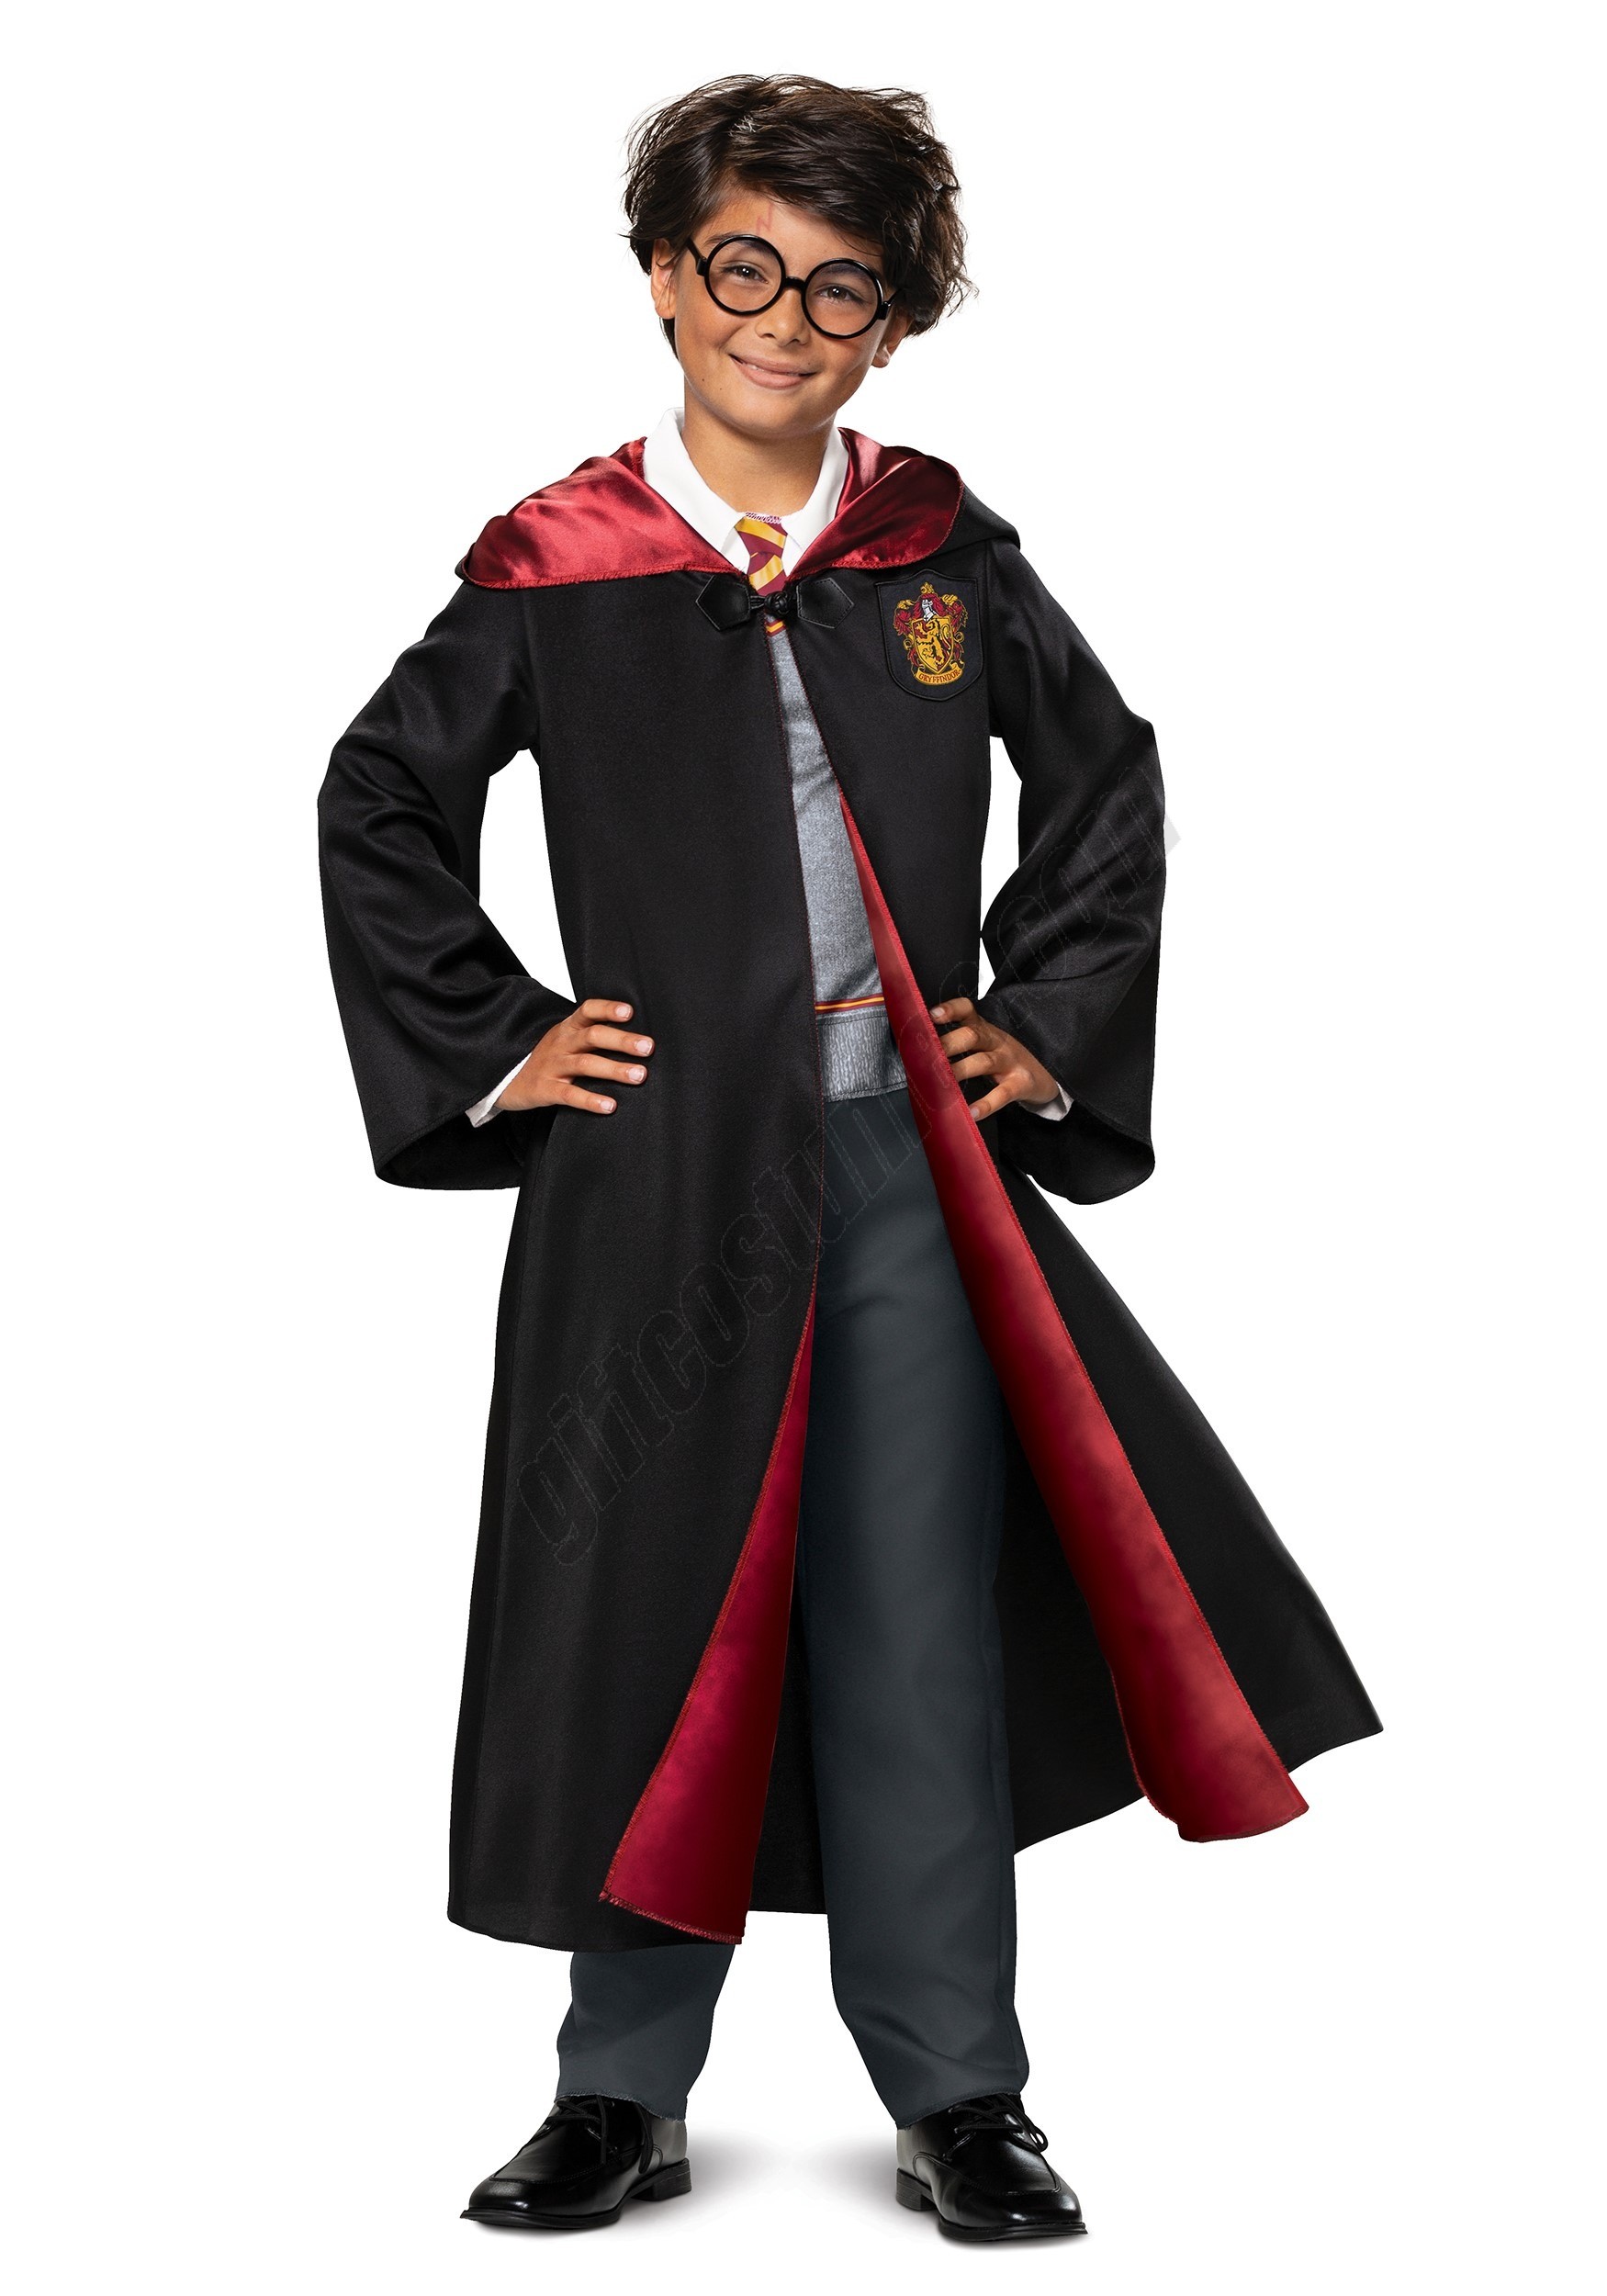 Boy's Harry Potter Deluxe Harry Costume Promotions - Boy's Harry Potter Deluxe Harry Costume Promotions